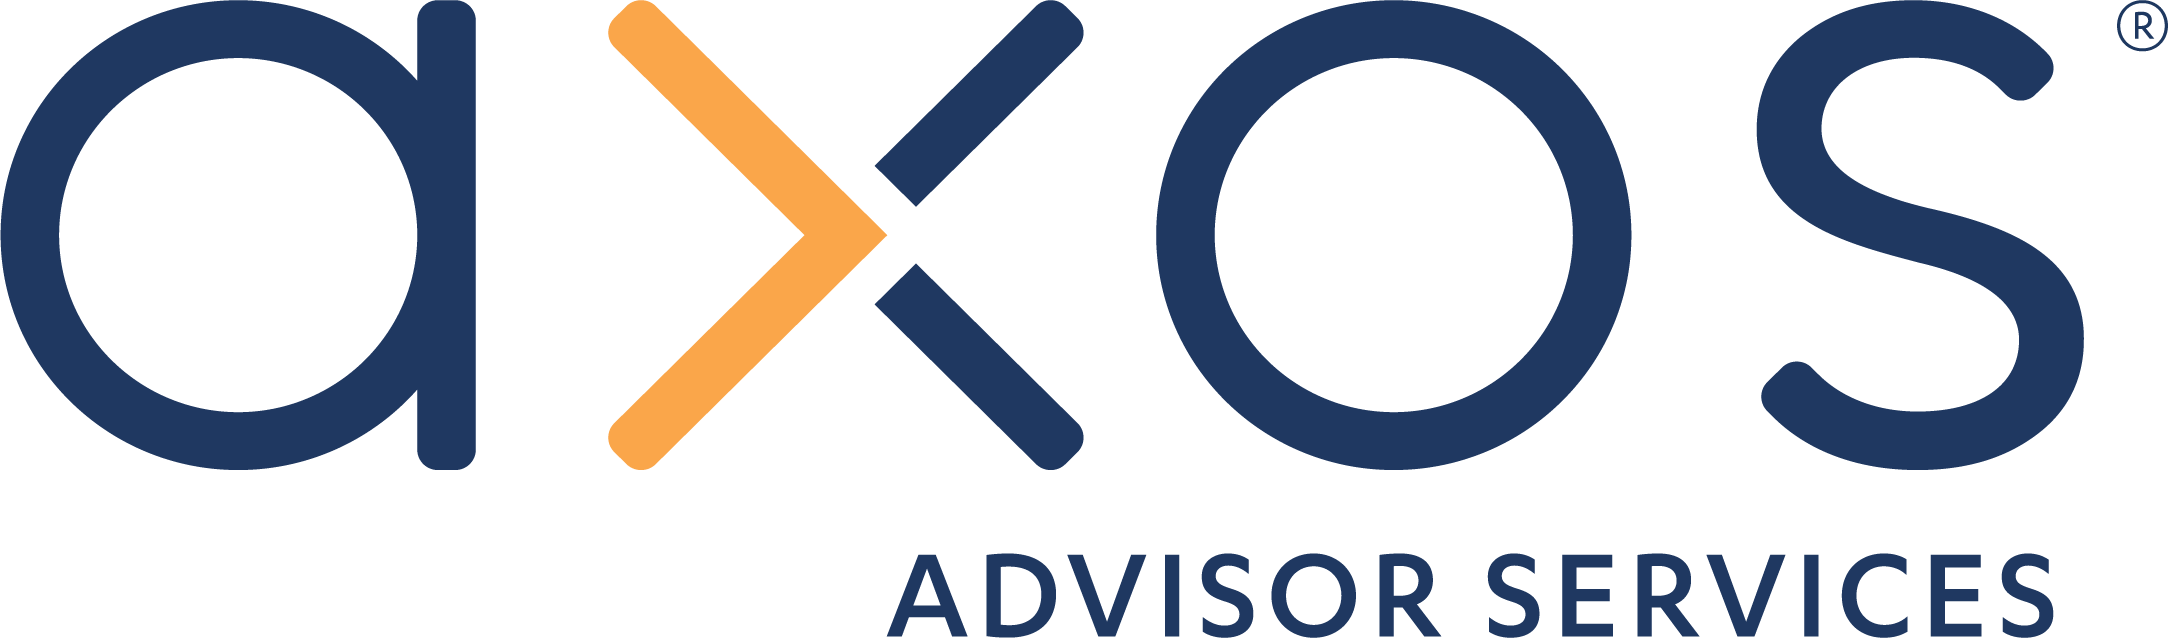 Axos Advisor Services Logo